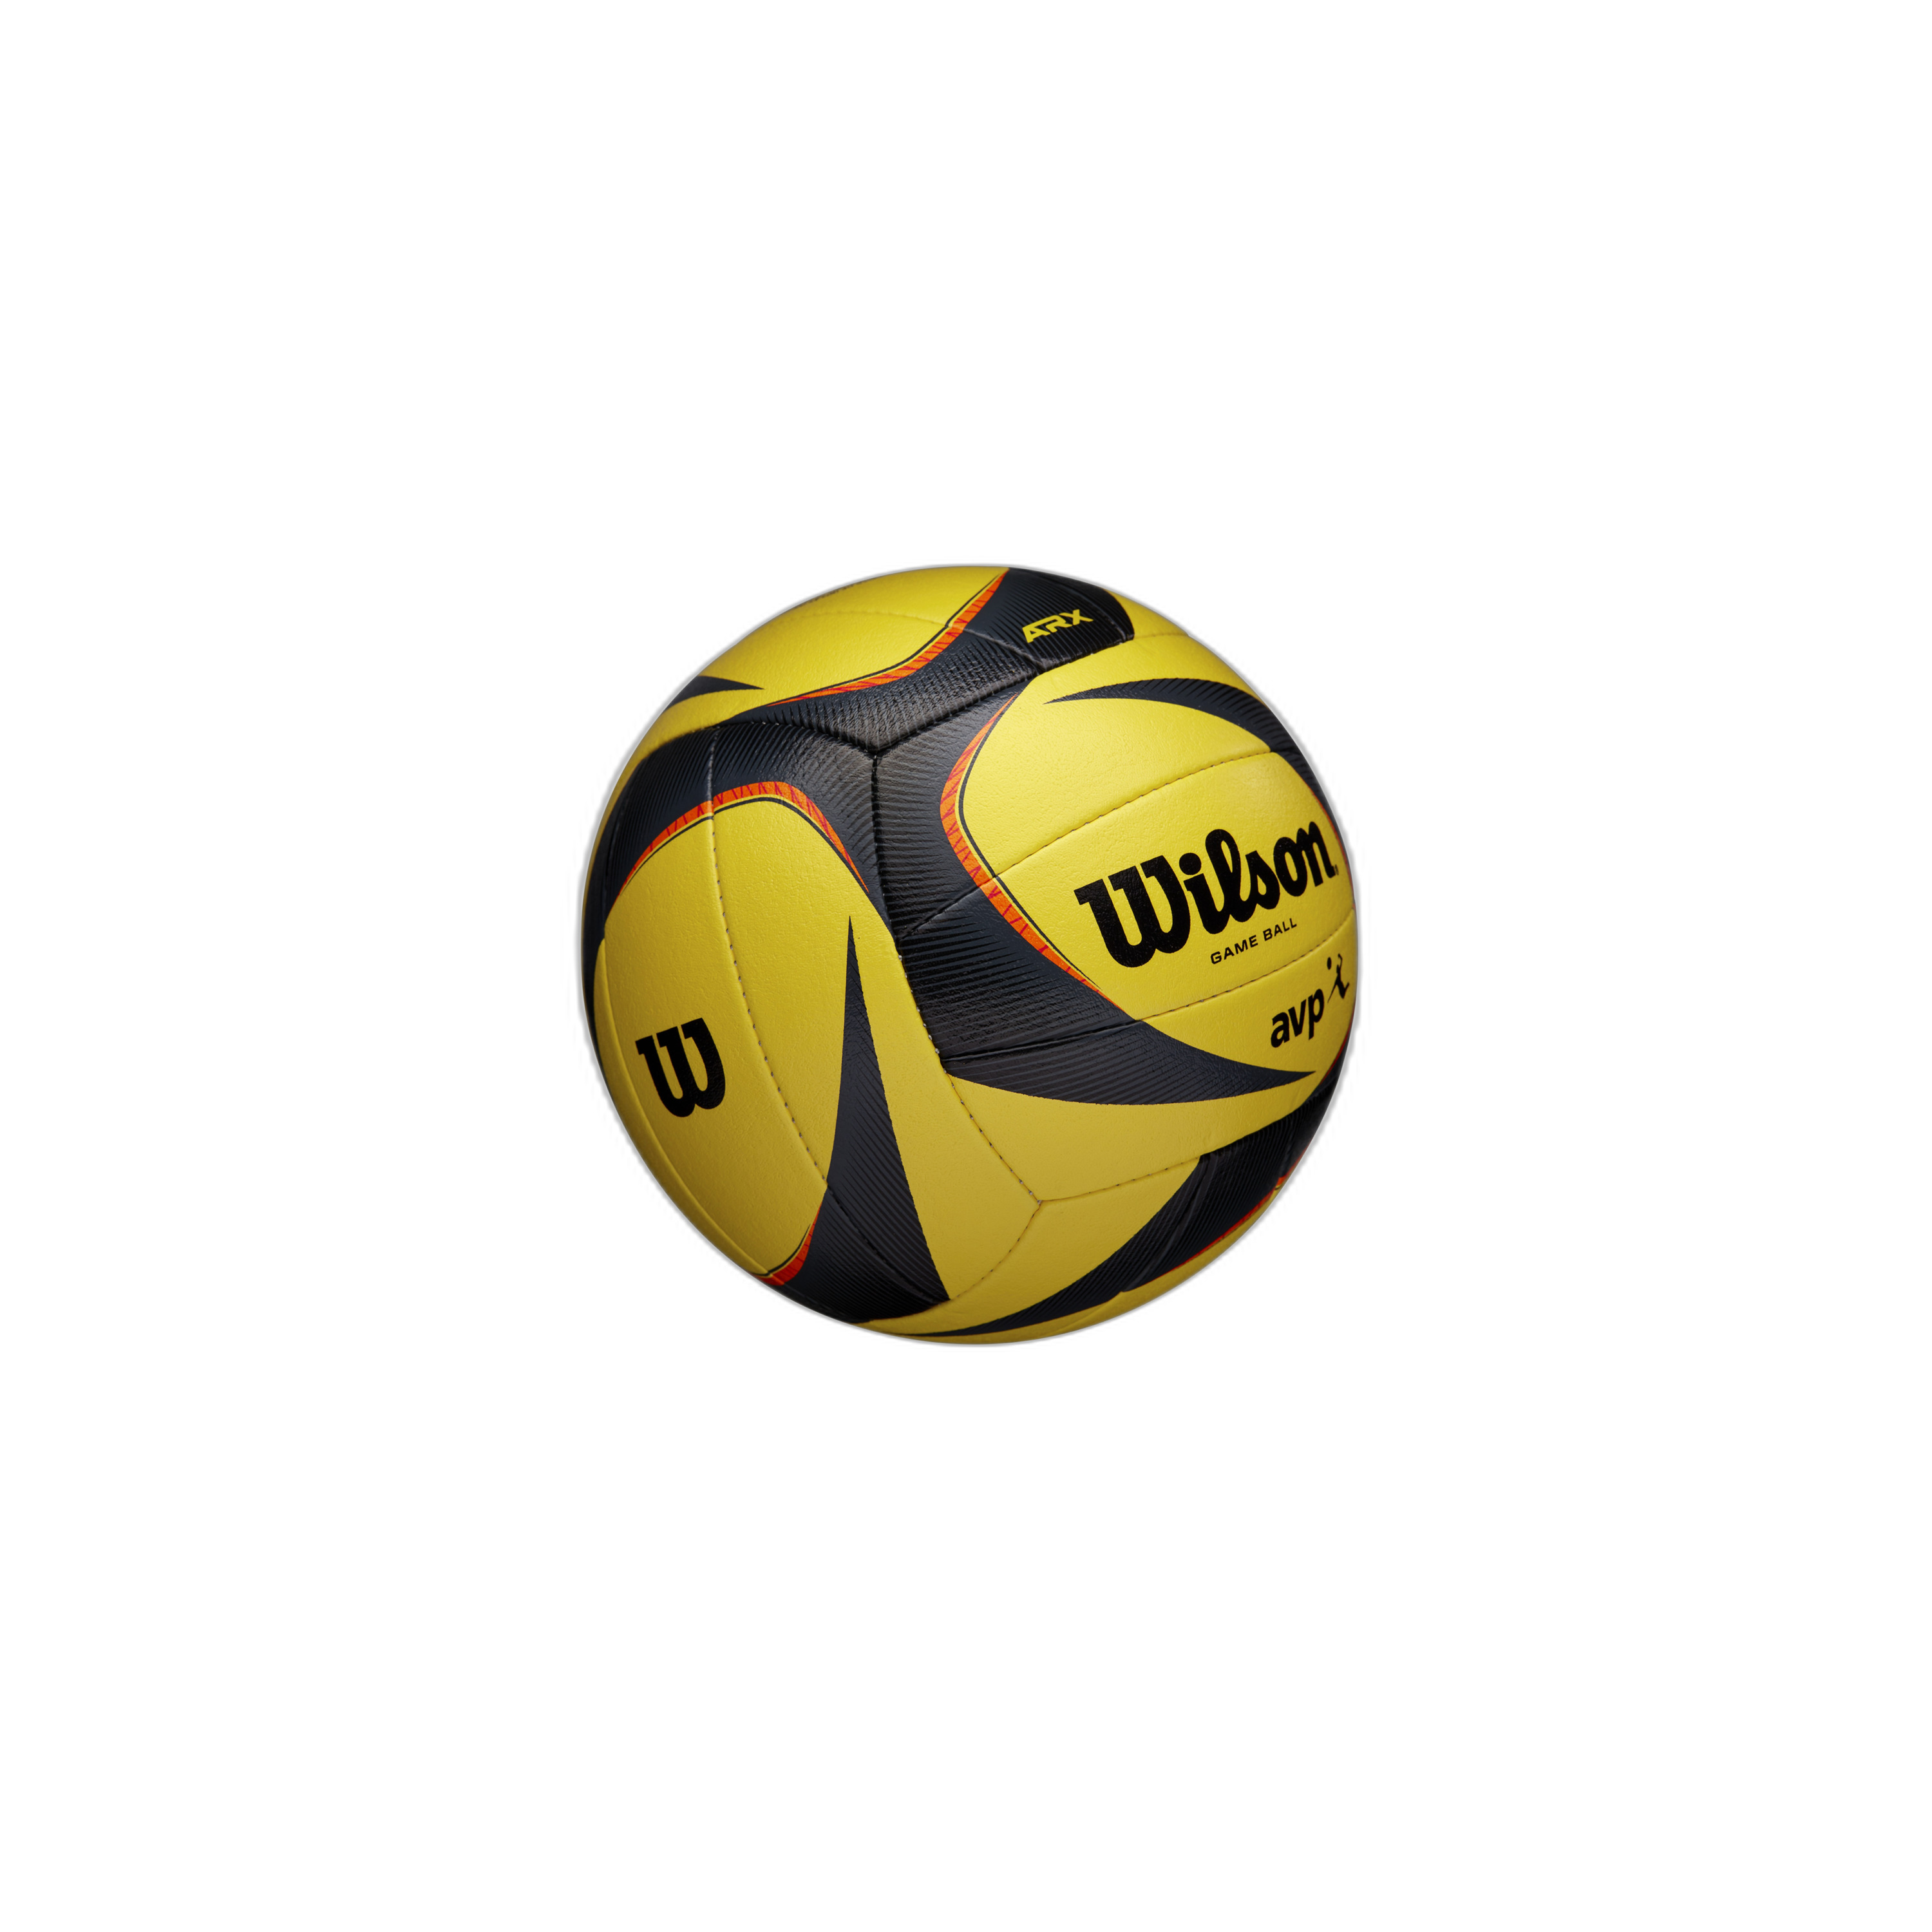 Balón Voleiboll Wilson Arx Avp Vb Official  MKP